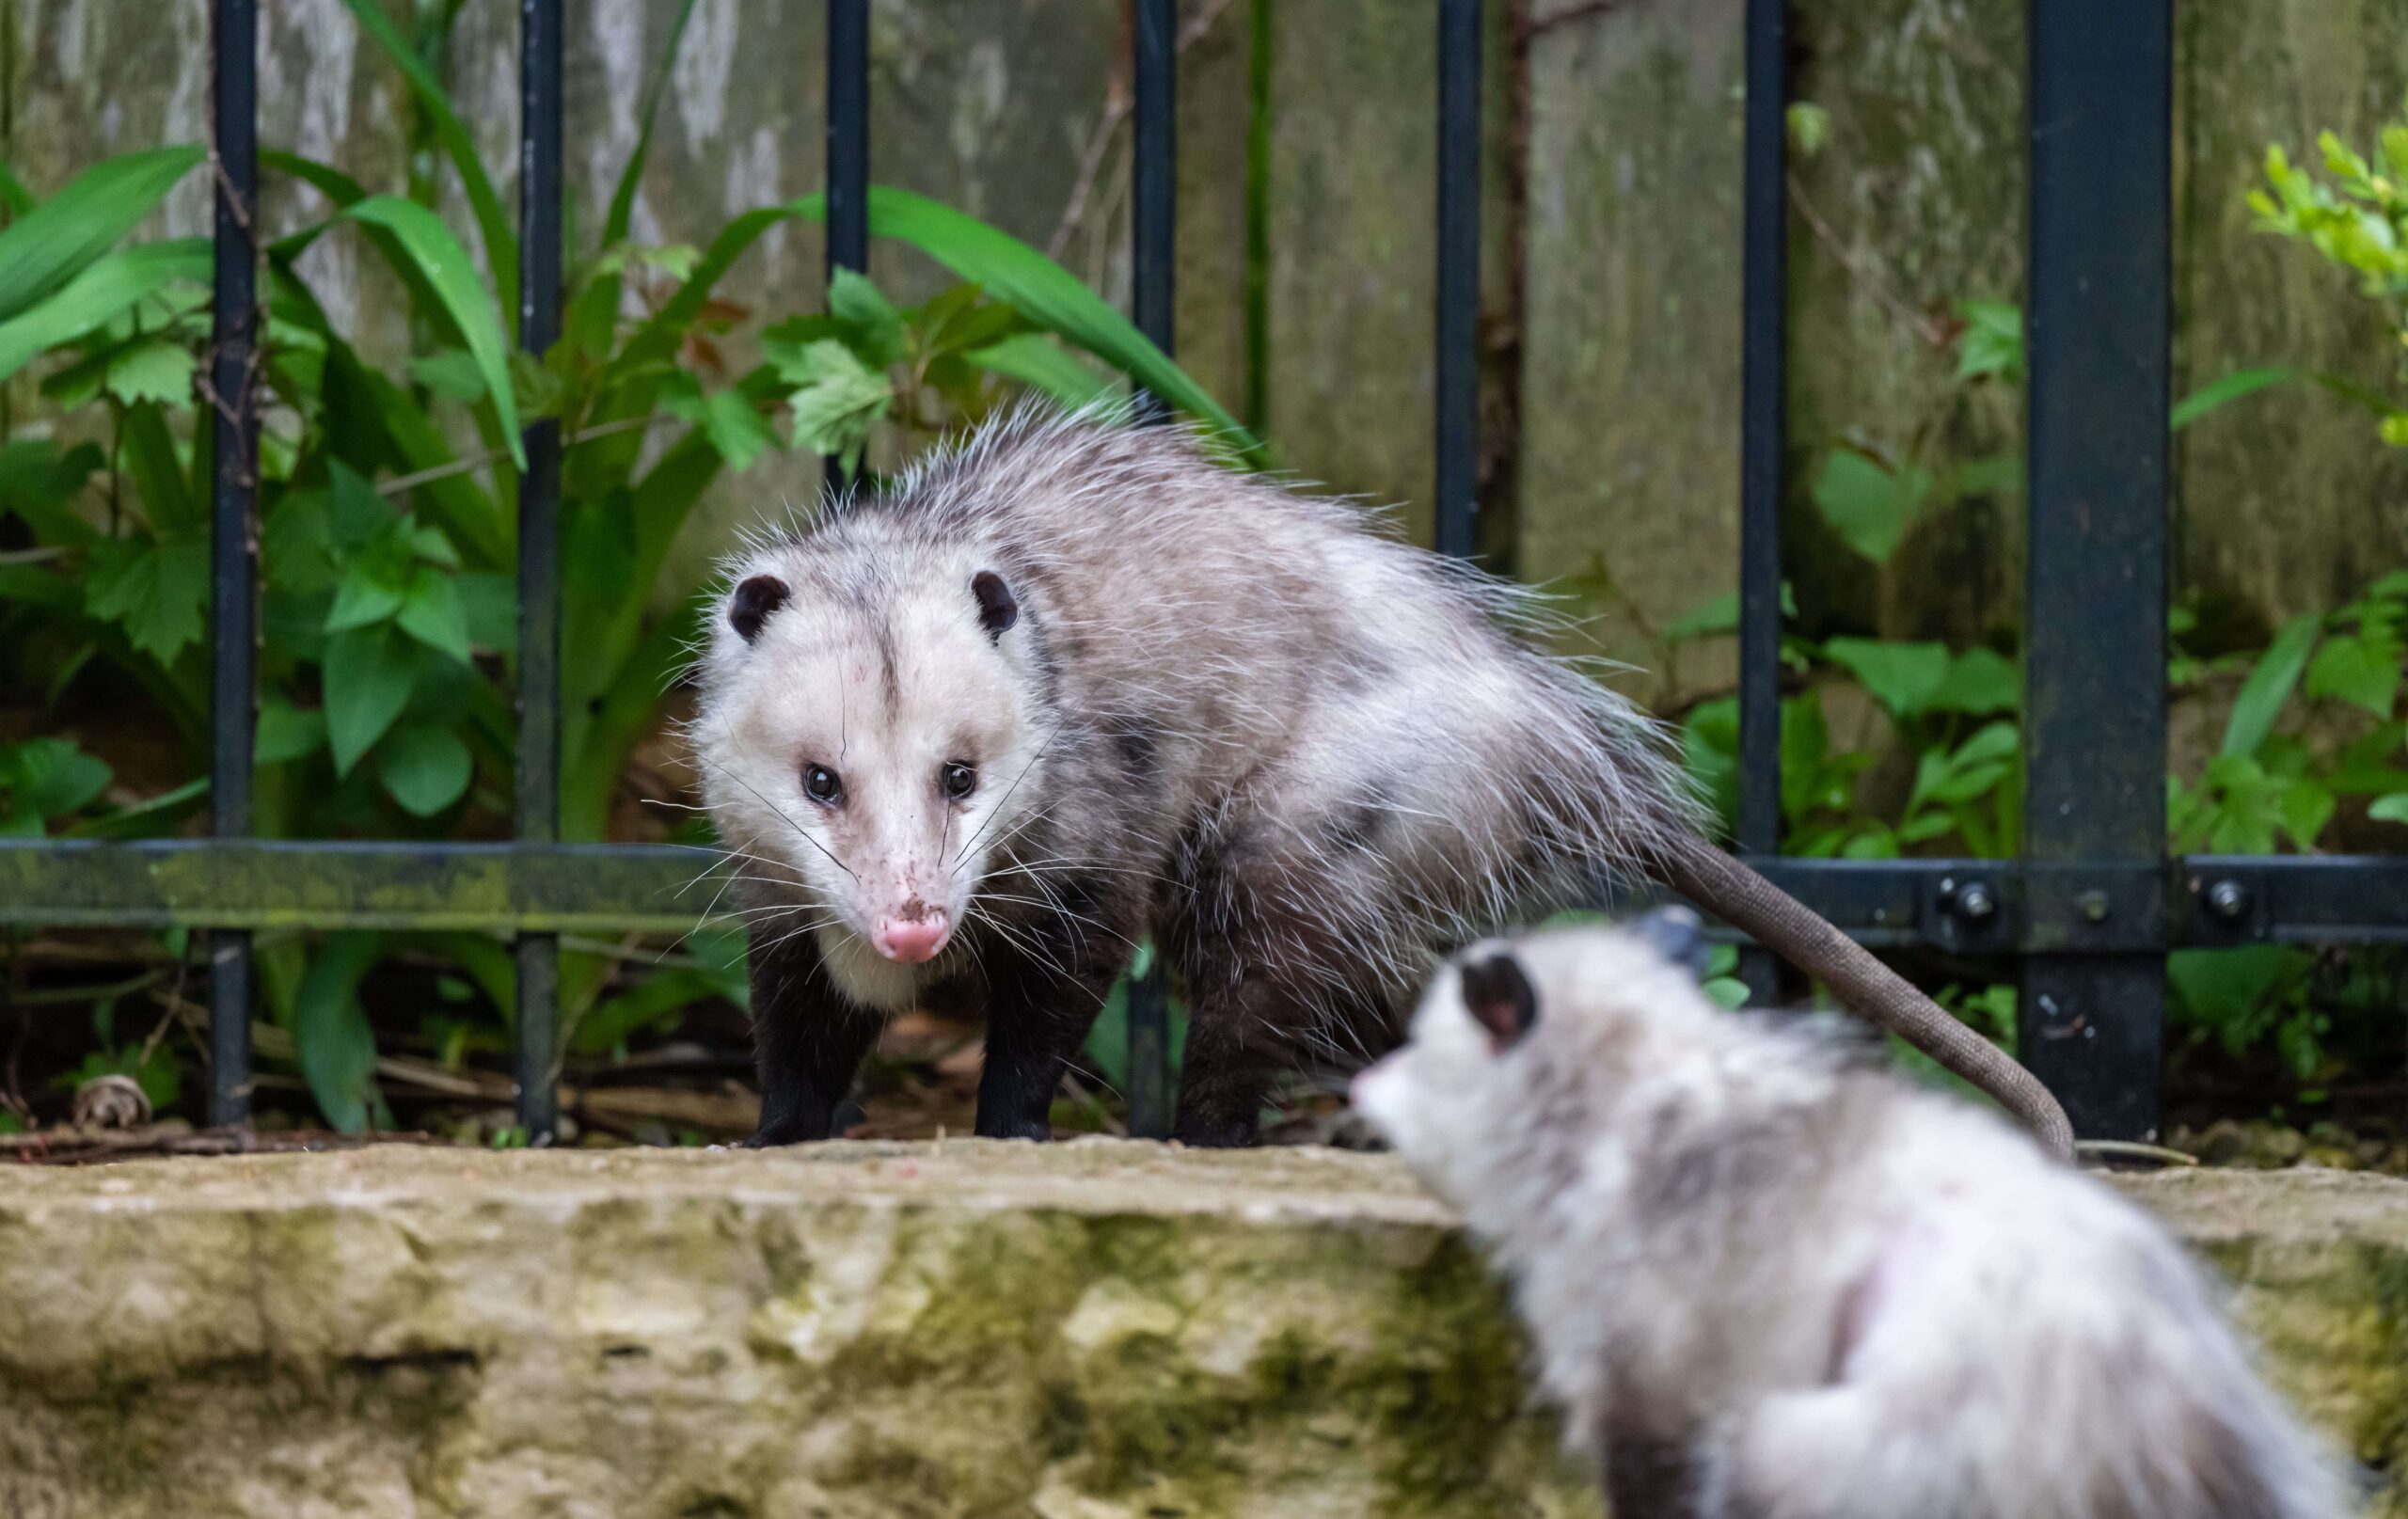 Opossum Removal NJ | Humane Wildlife Opossum Removal New Jersey - +1-877-468-5748